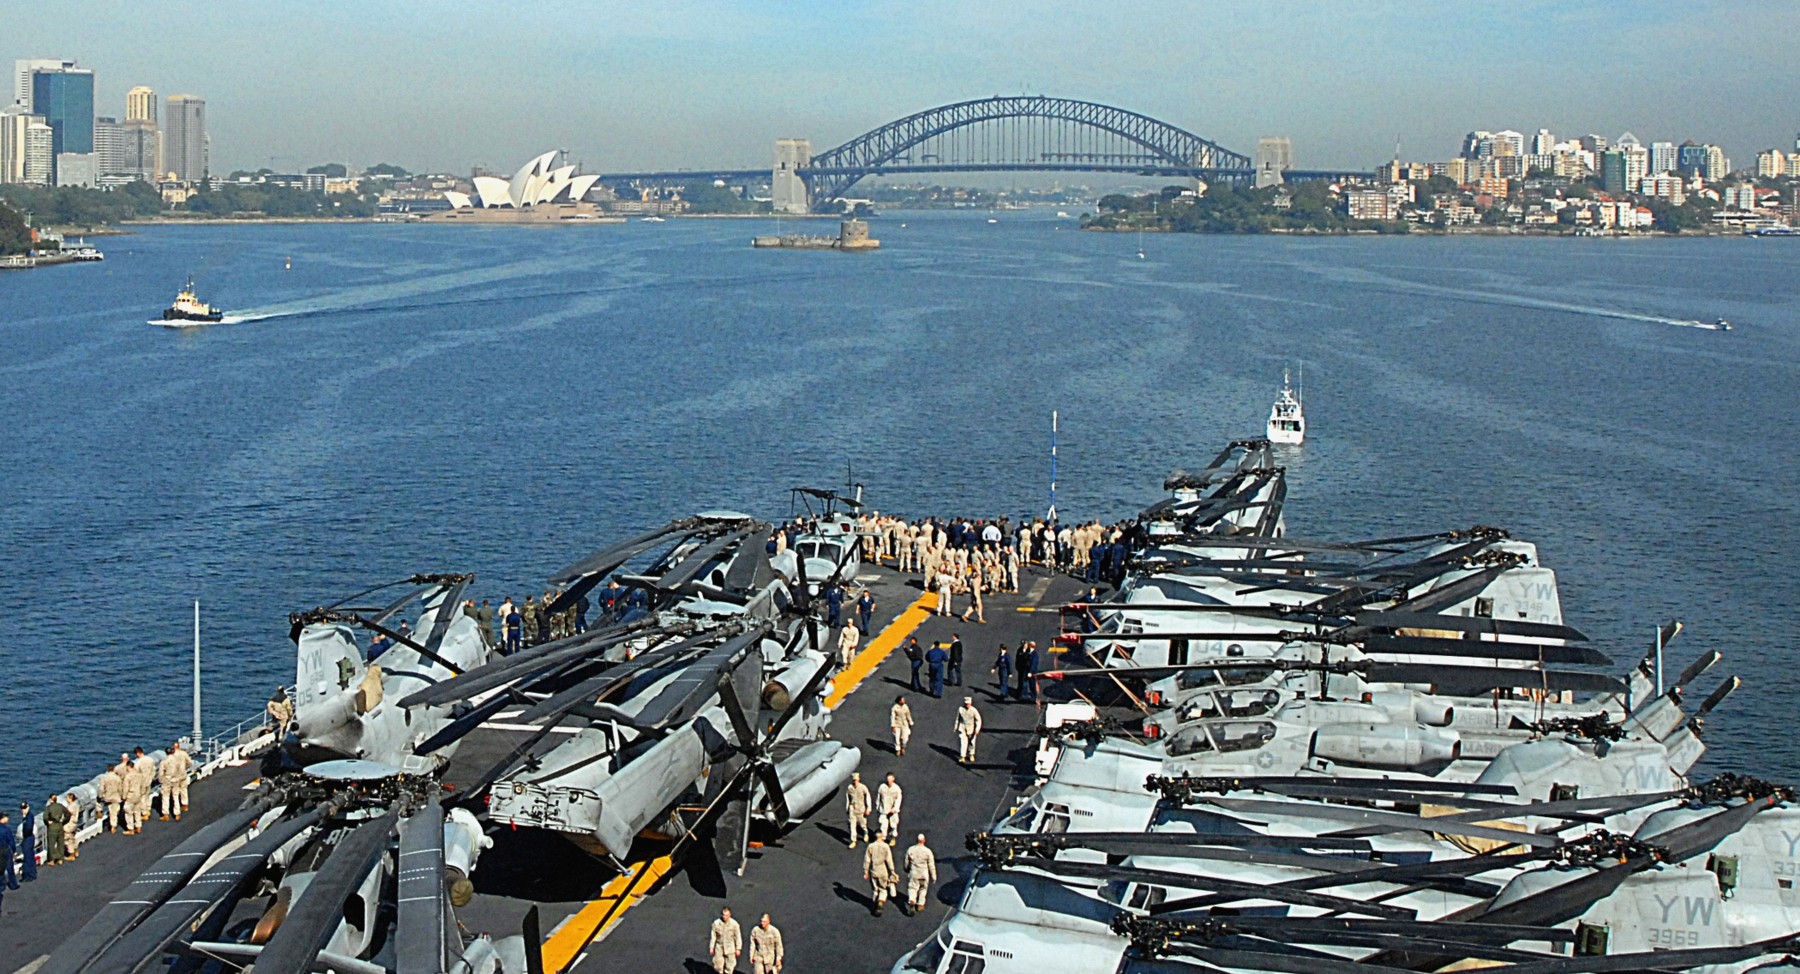 lha-5 uss peleliu tarawa class amphibious assault ship landing helicopter us navy sydney australia 44